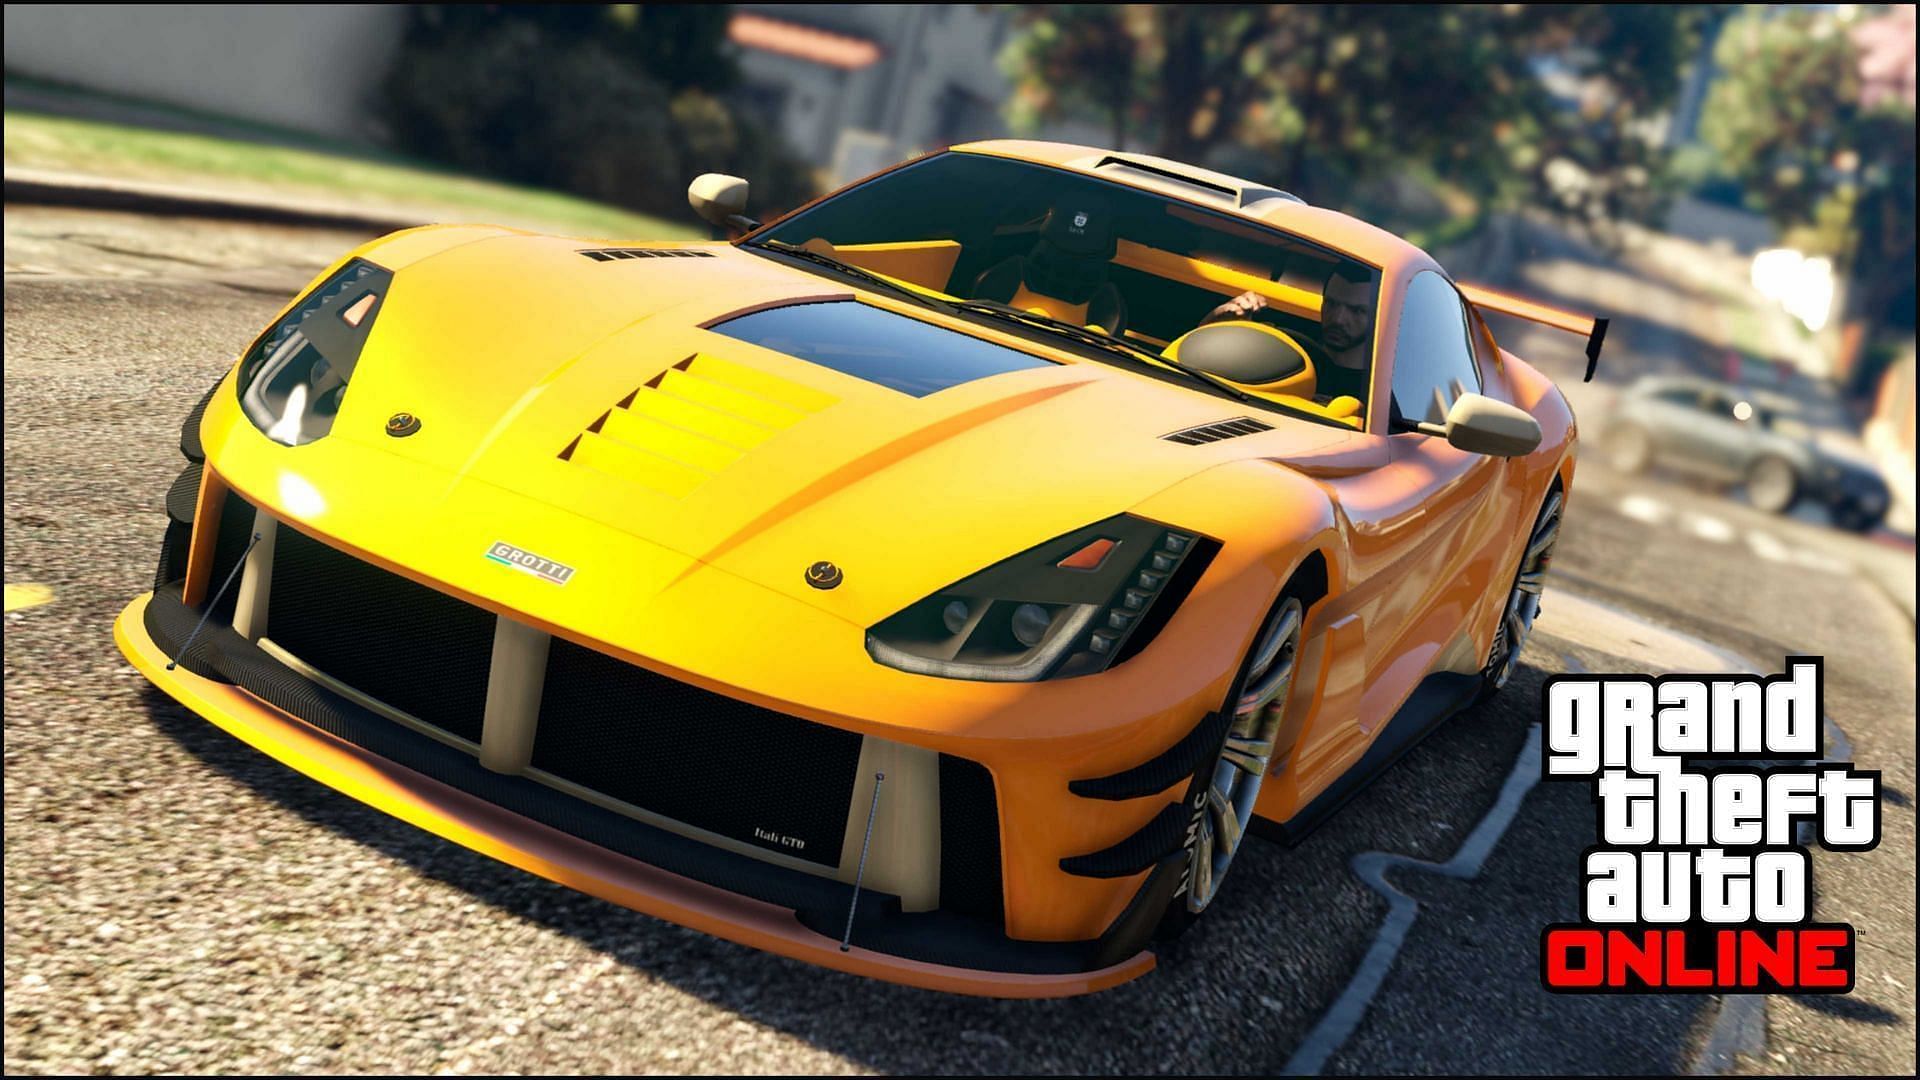 The Grotti Itali GTO in GTA Online (Image via Rockstar Games)